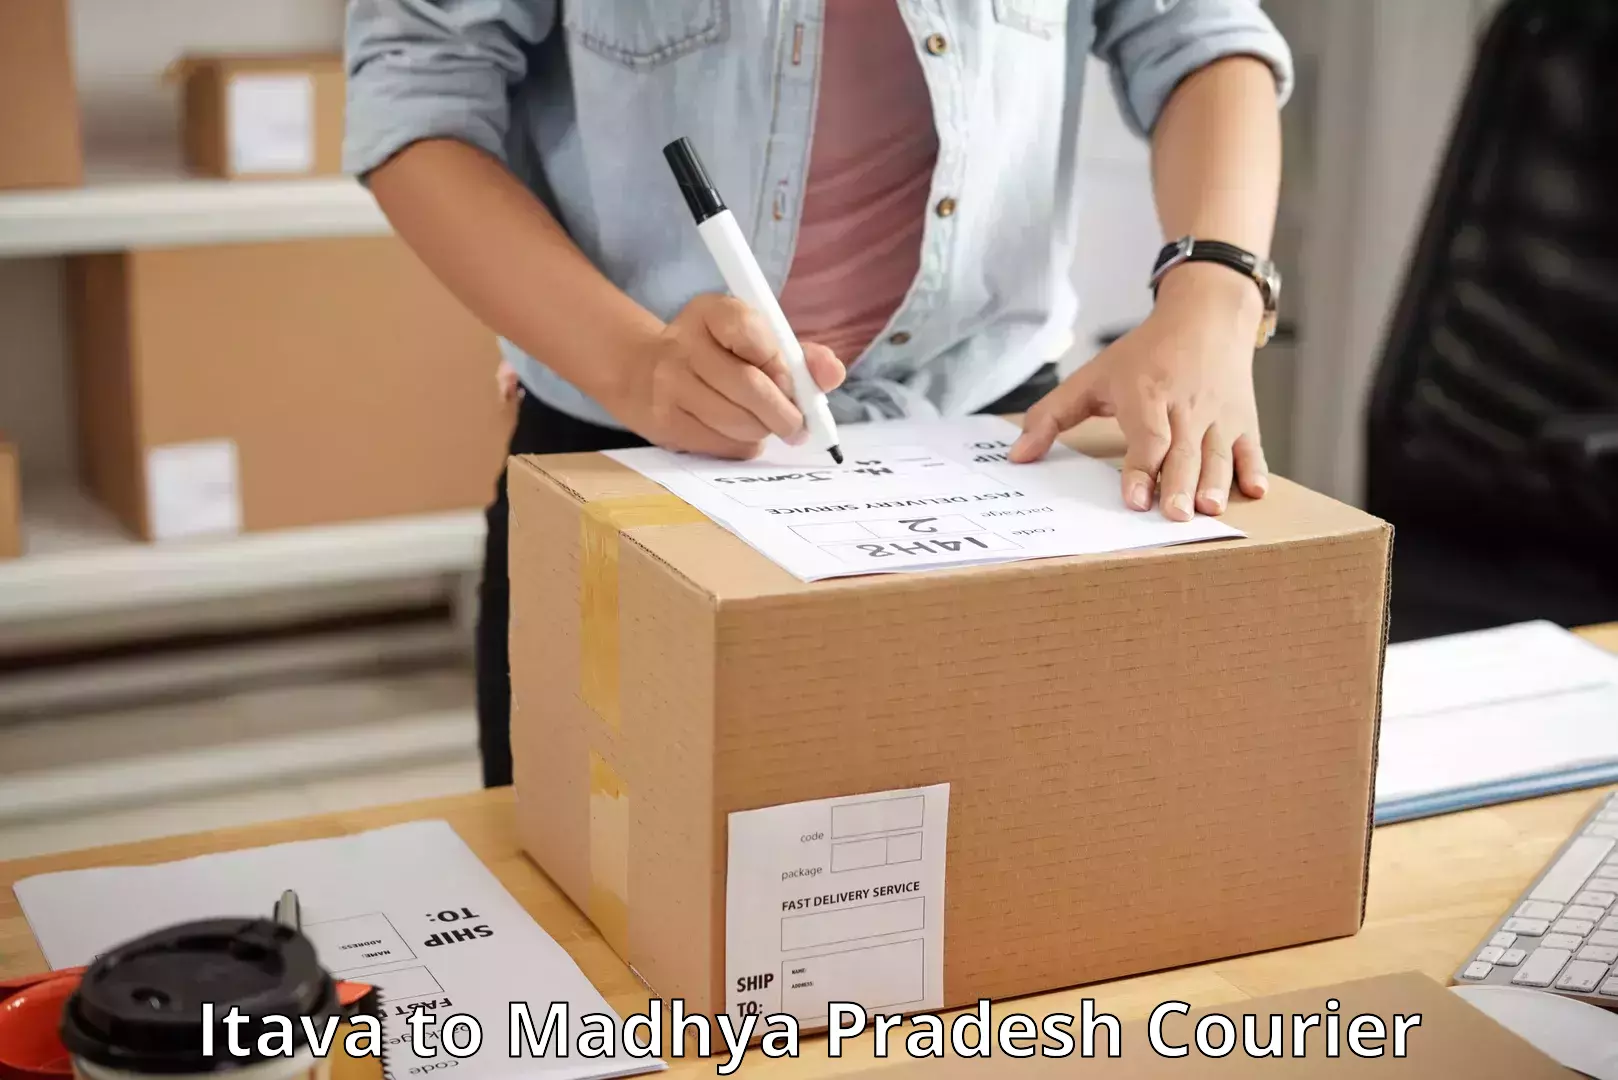 Doorstep delivery service Itava to Madhya Pradesh